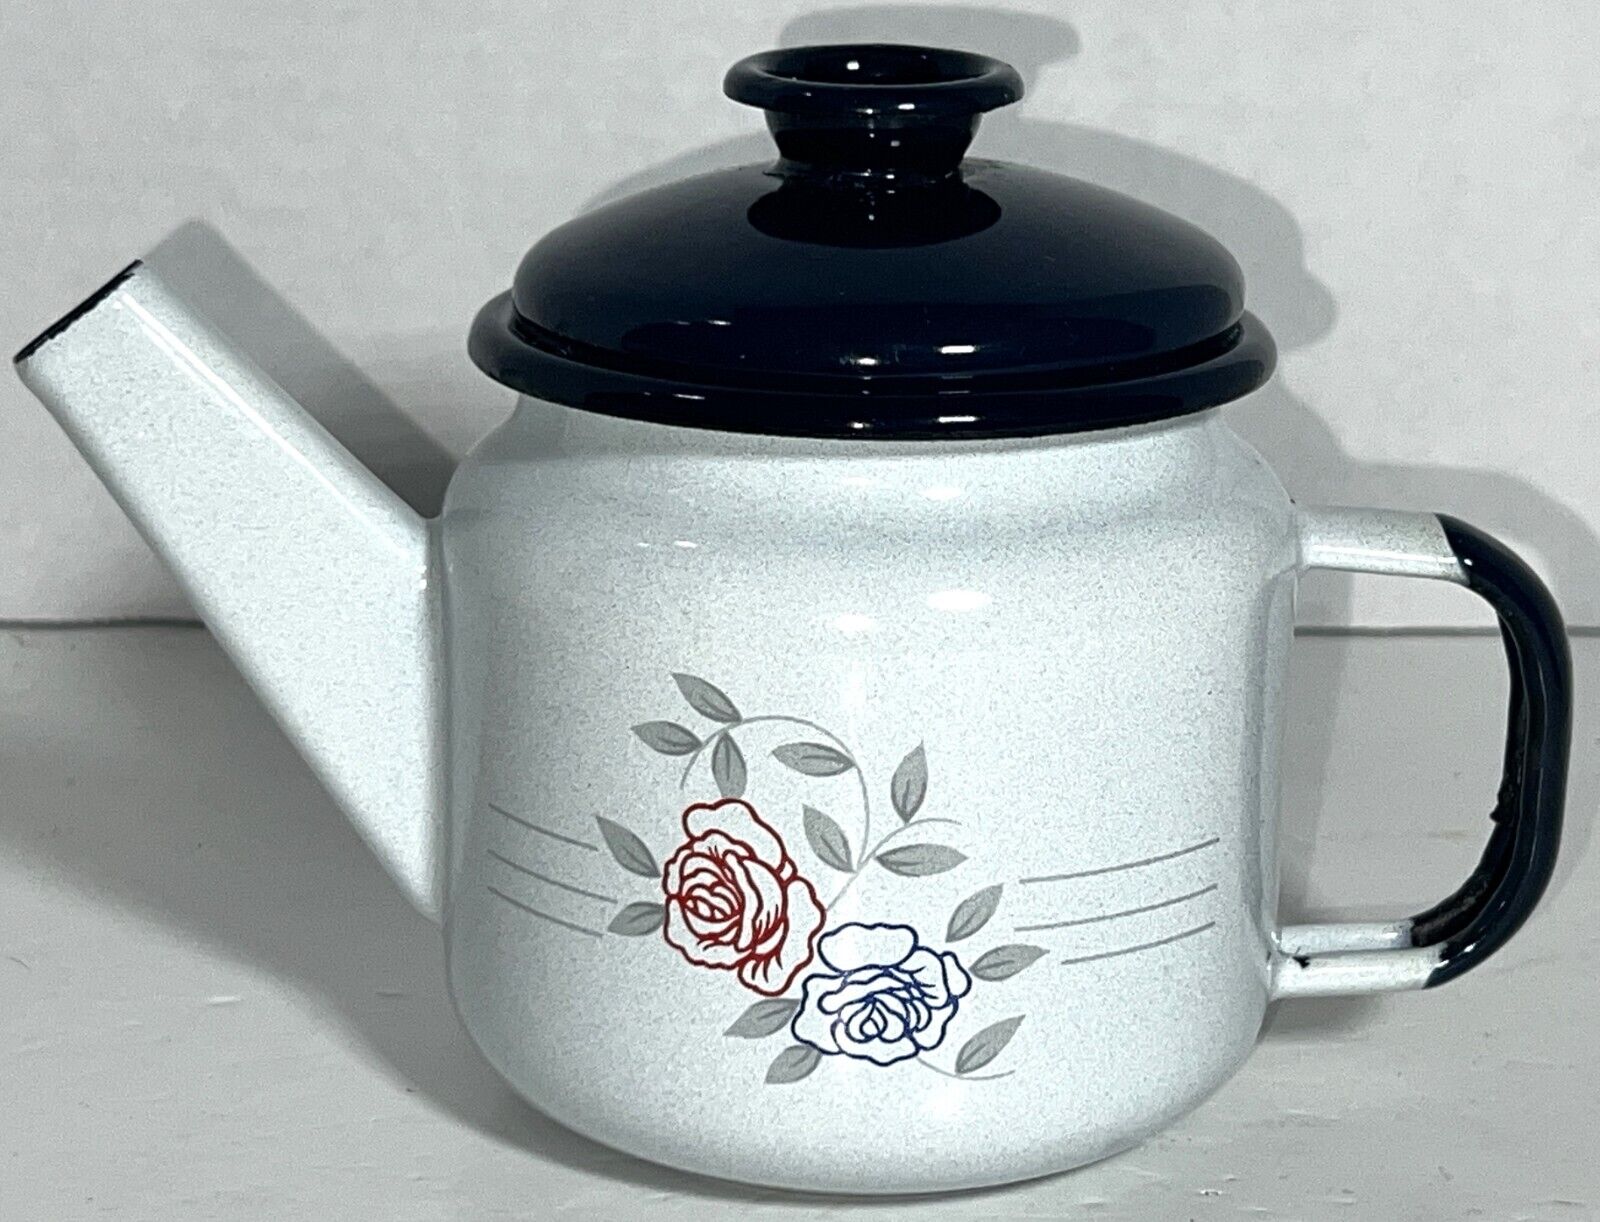 VTG Enamel Enamelware Rose Floral White Blue Metal Mini Small Tea Teapot Kettle